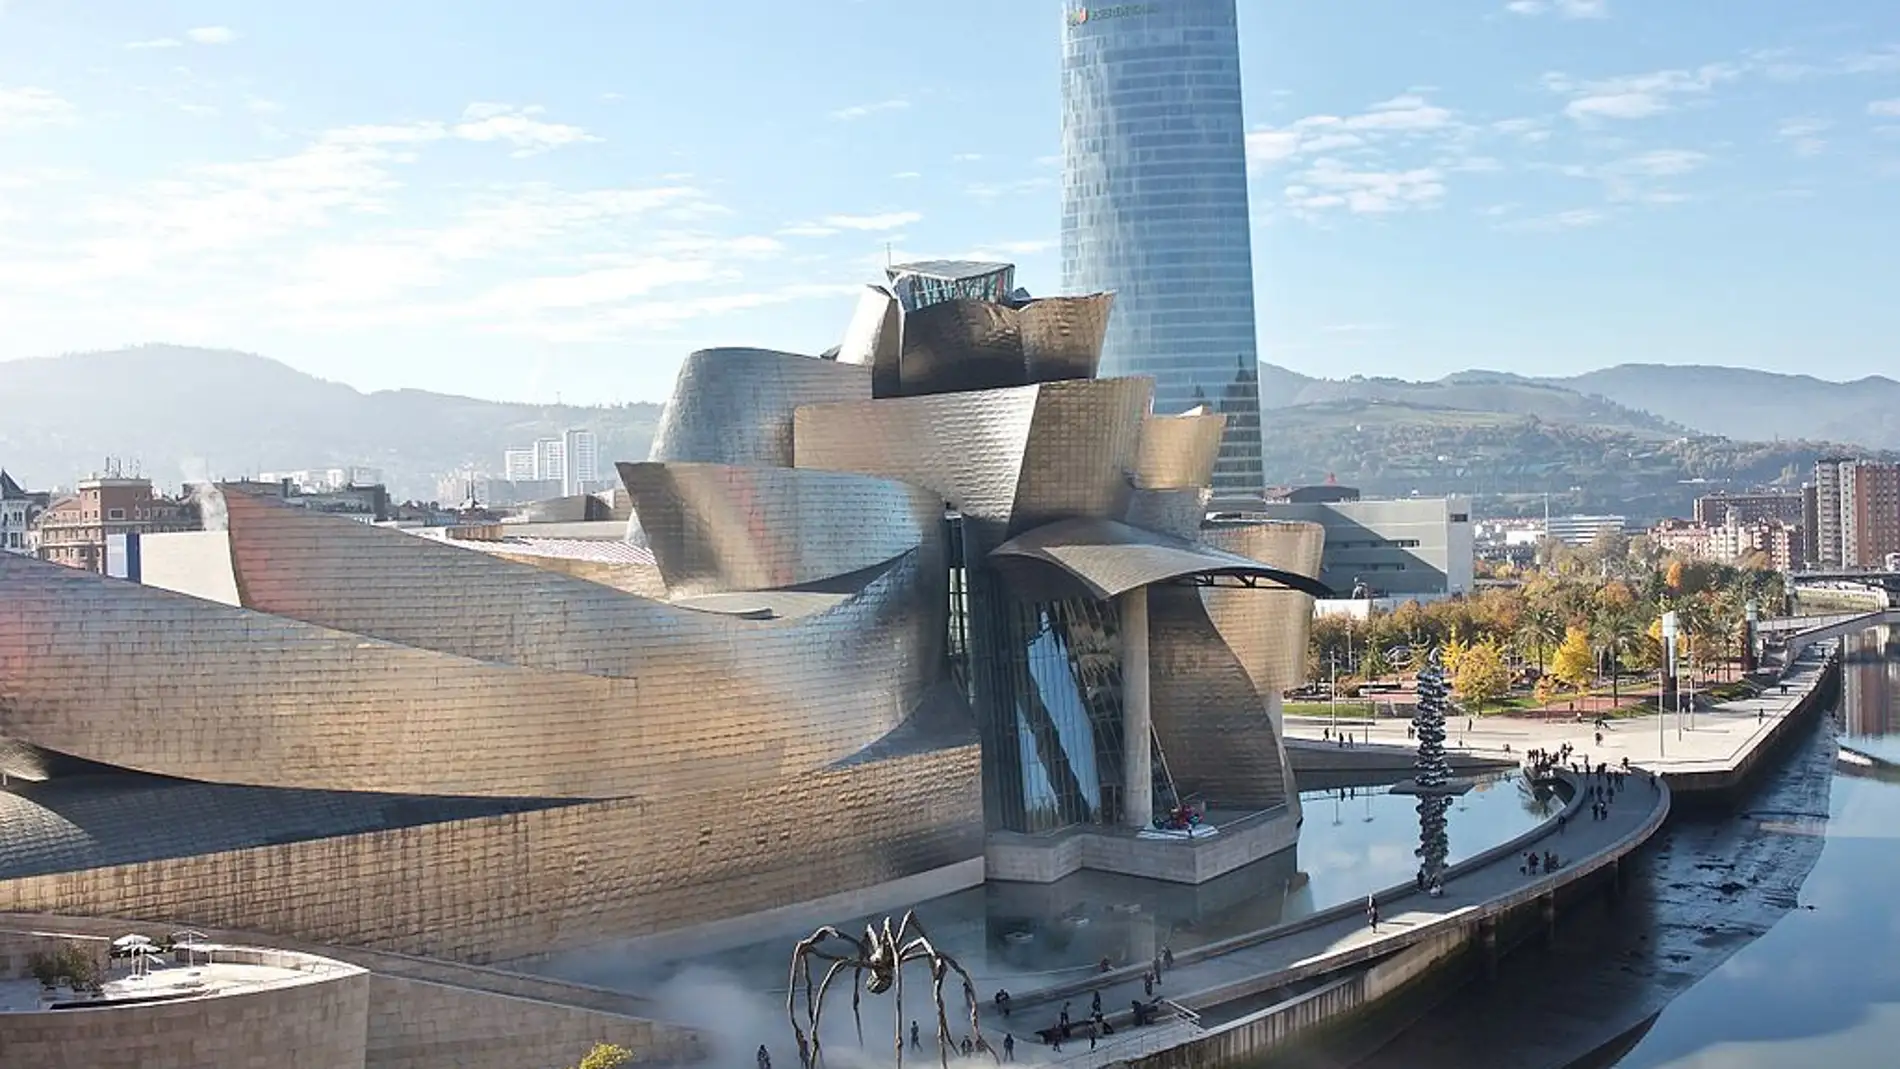 Museo Guggenheim de Bilbao: 5 curiosidades que no te dejarán indiferente